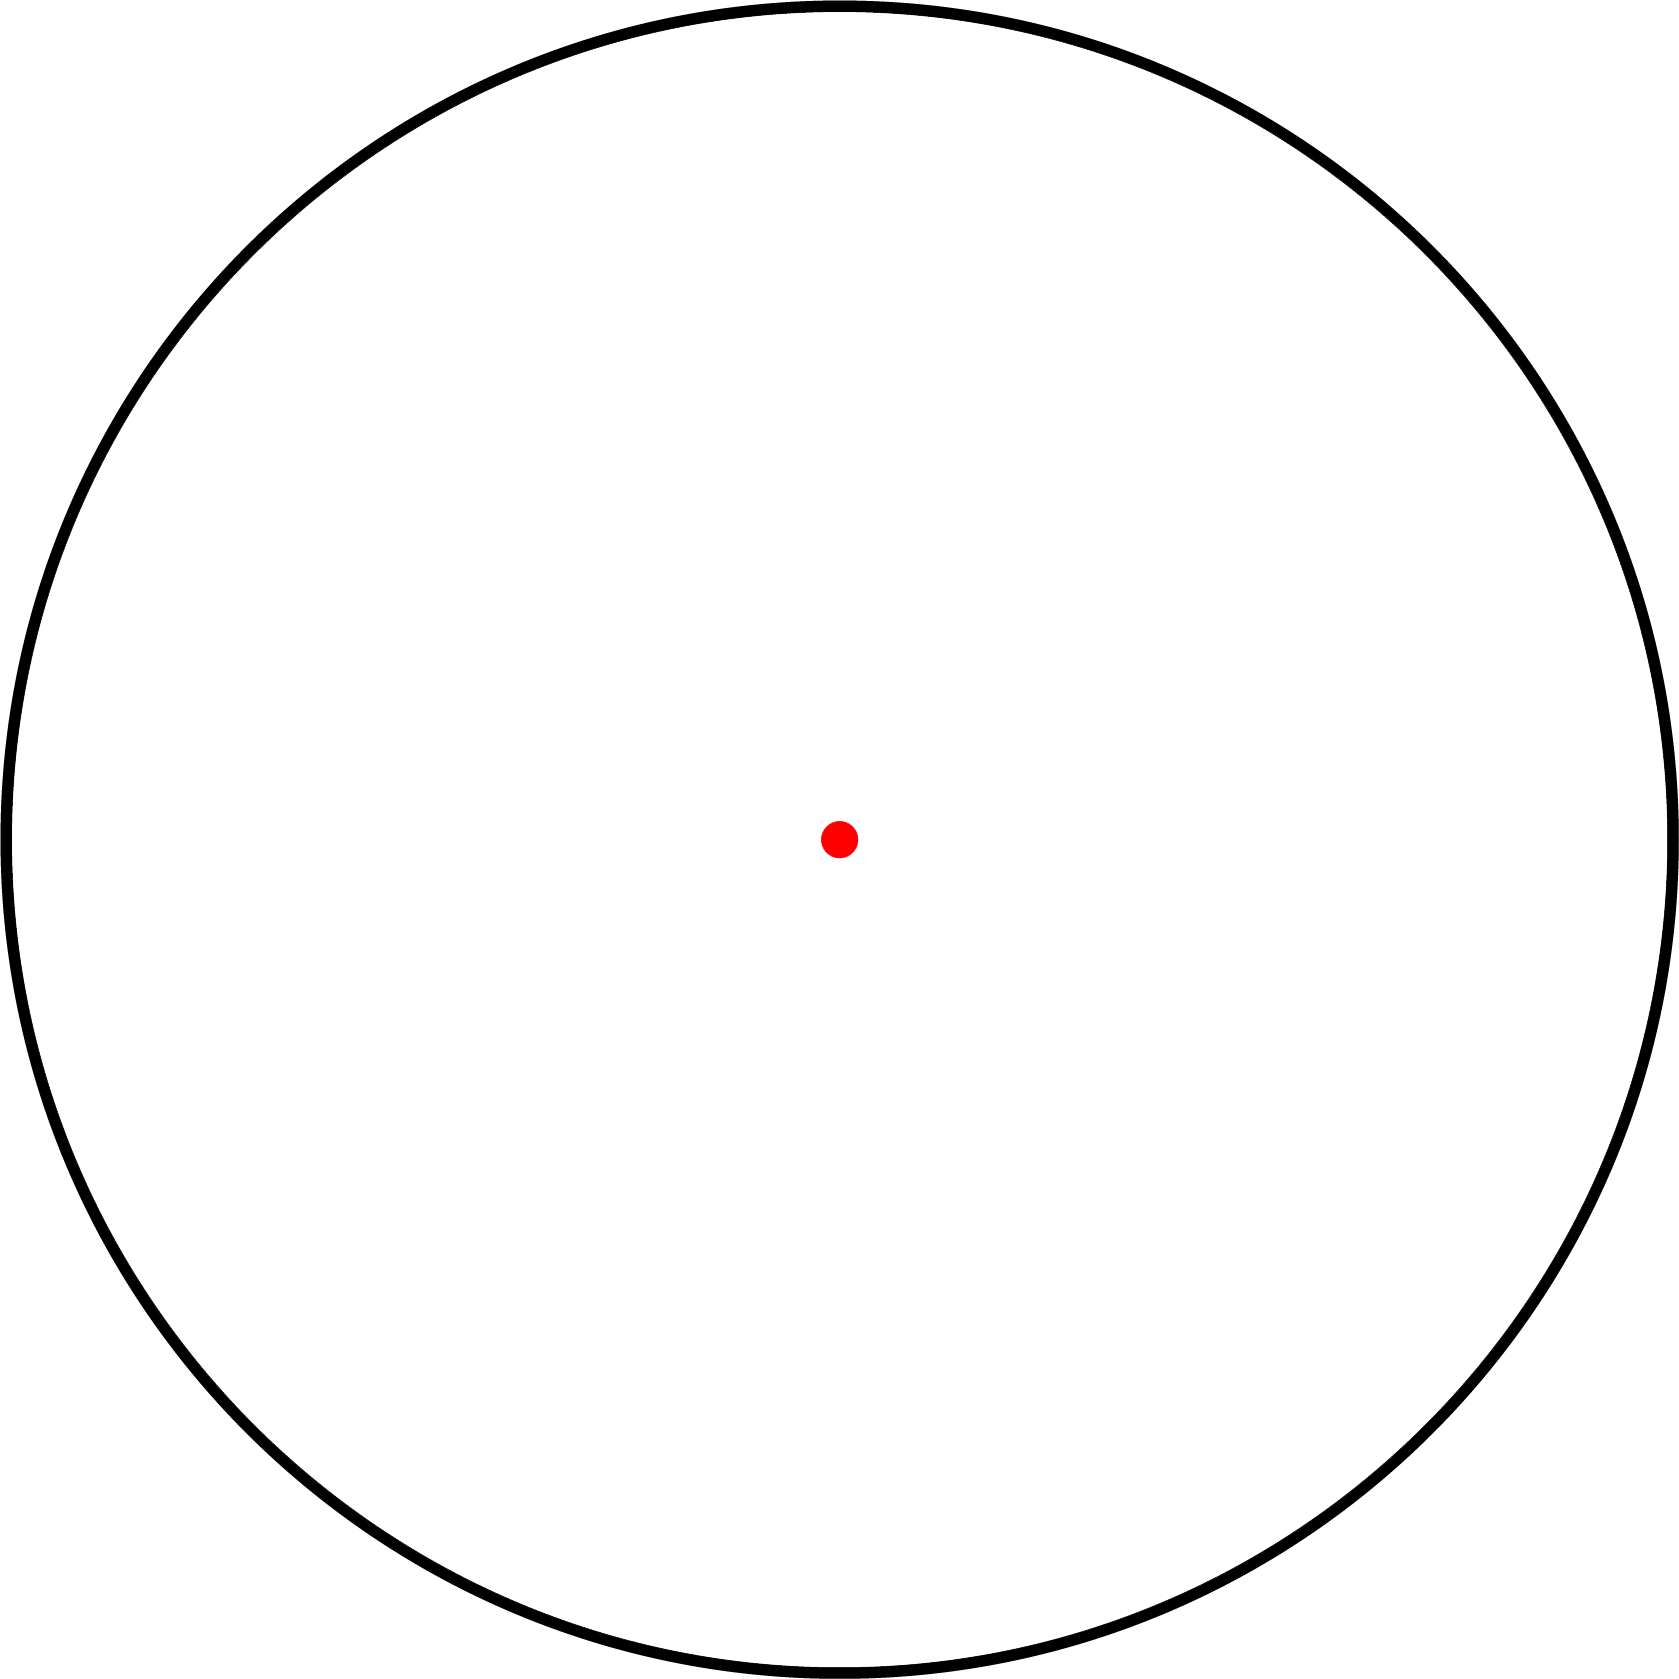 Hi-Lux Optics MM-2 Red Dot Sight